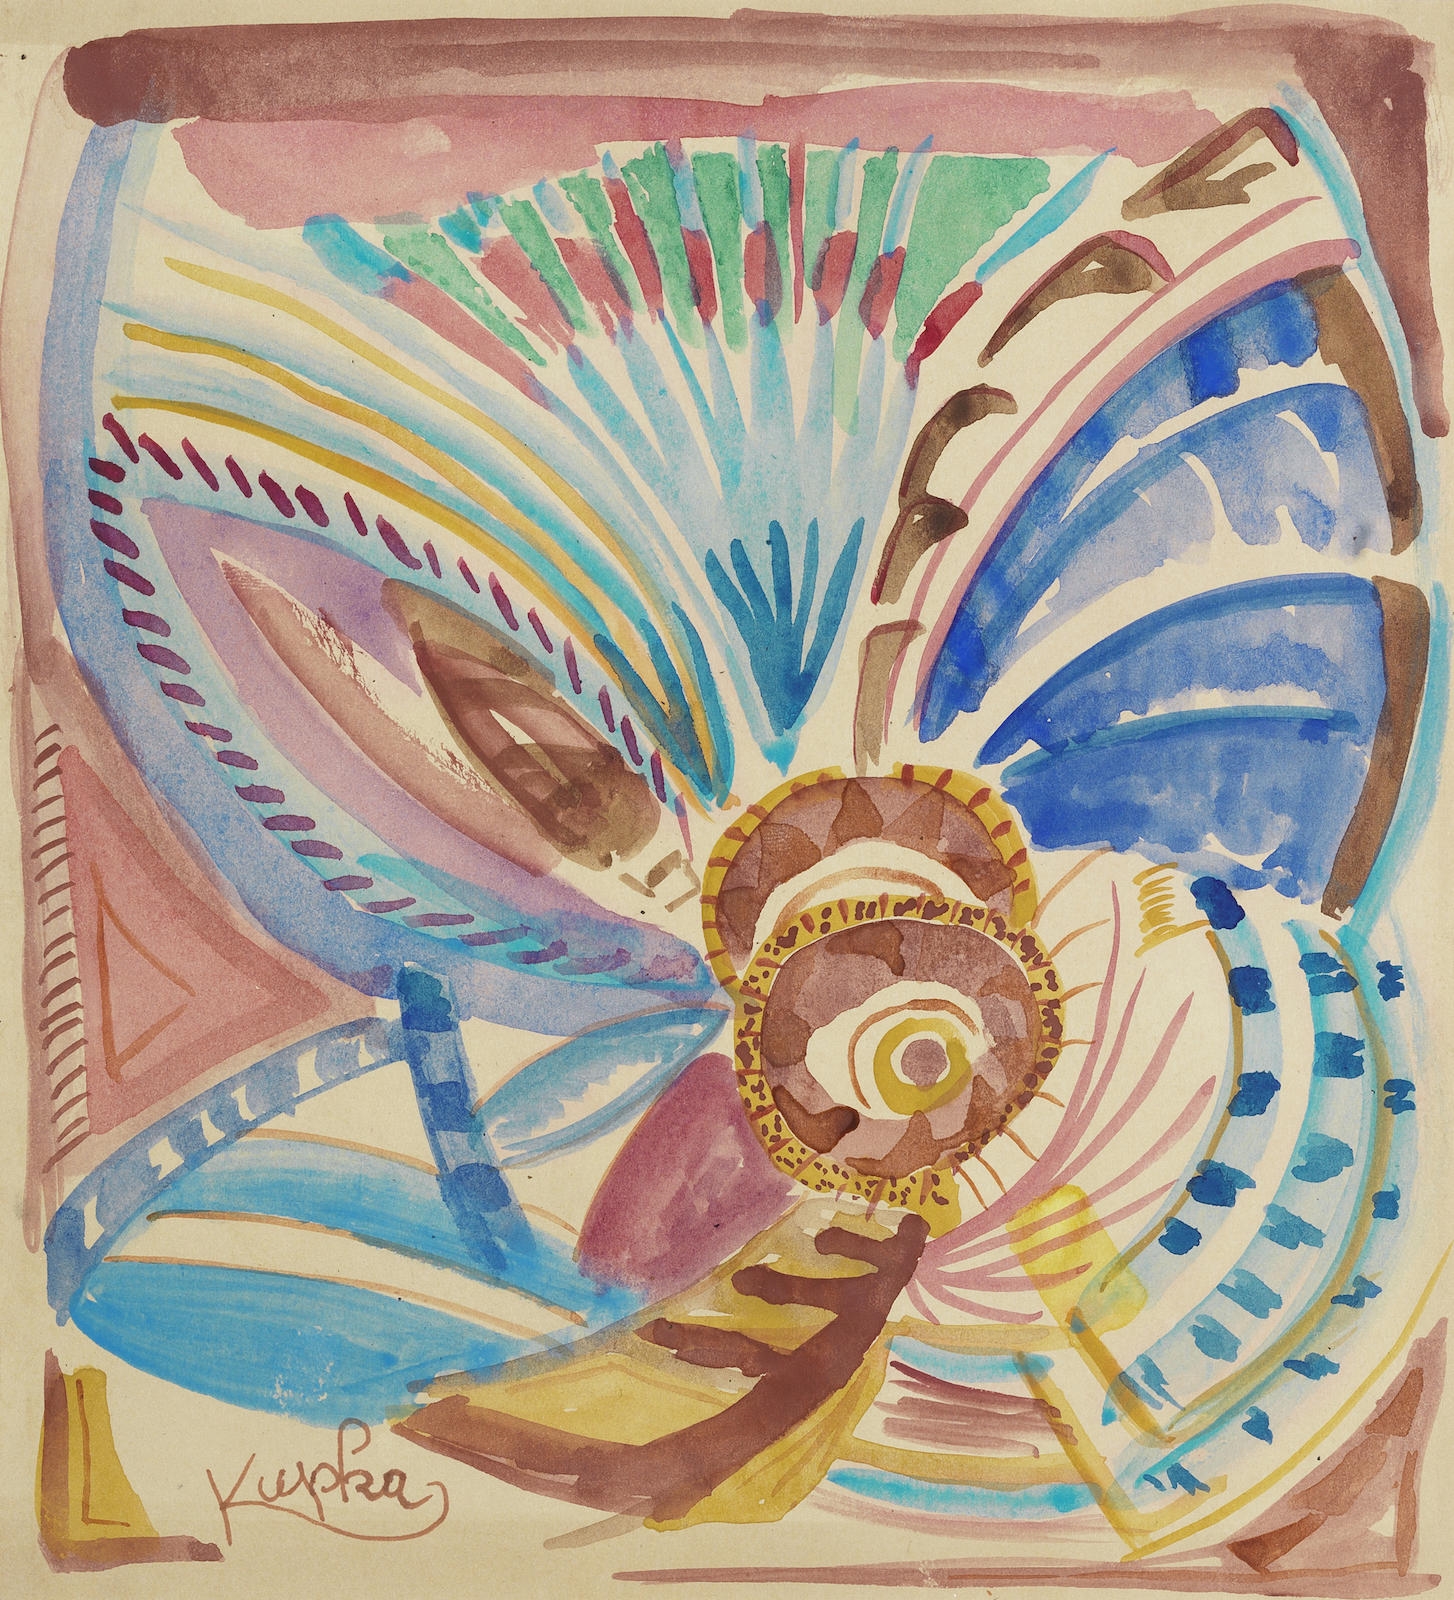 Composition abstraite by František Kupka, 1925